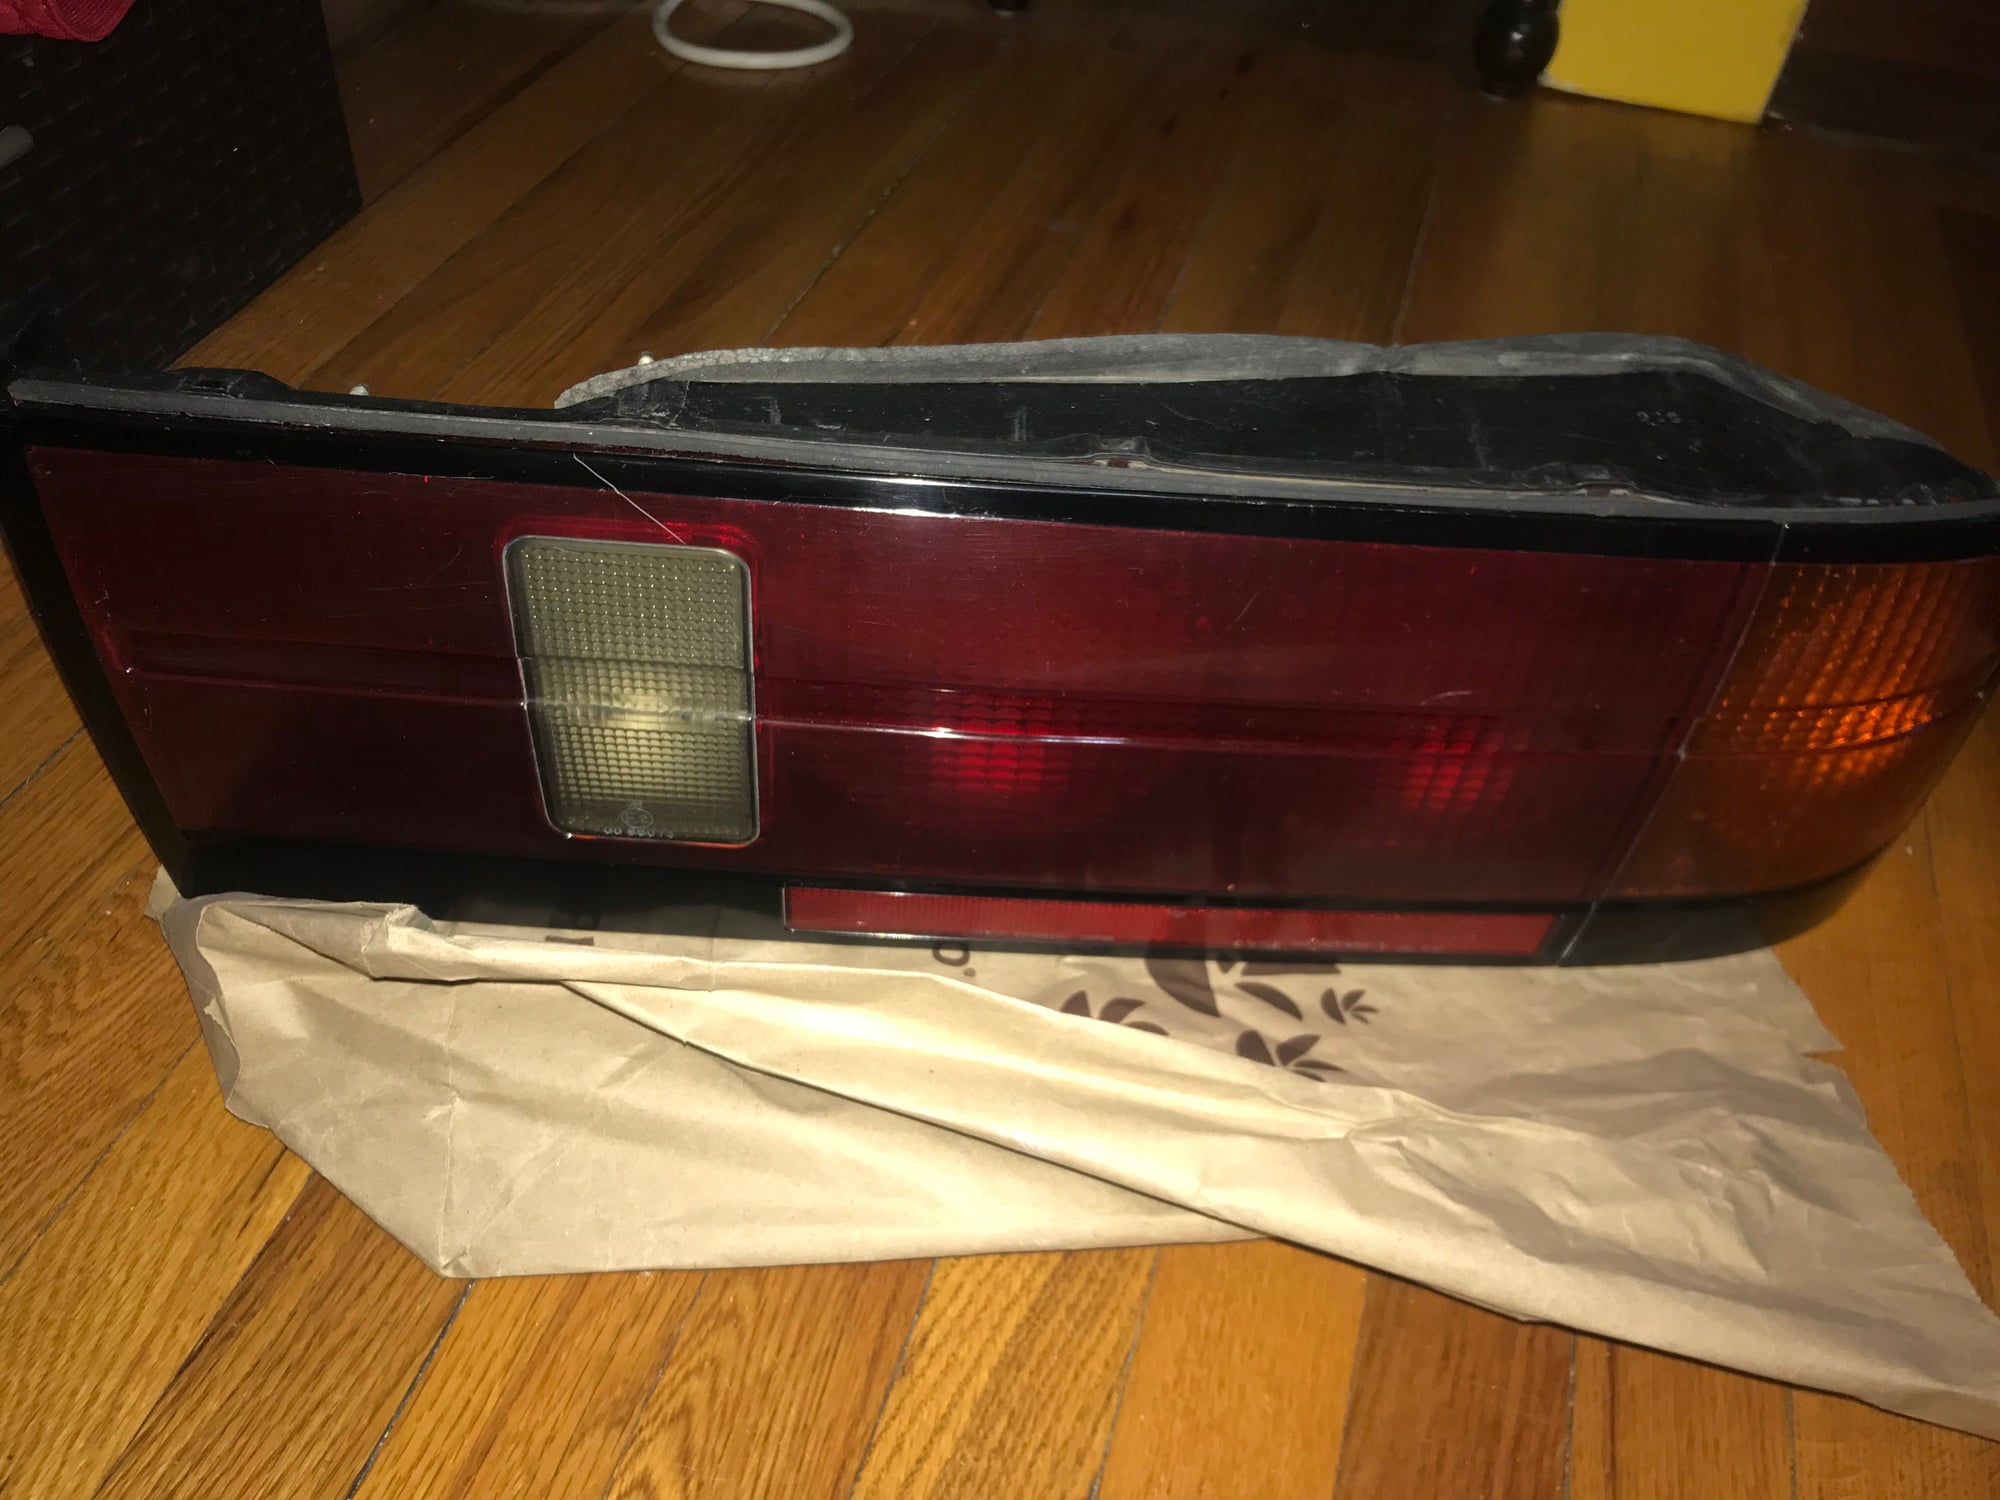 1993 Mazda RX-7 - FC S5 tail lights - Accessories - $125 - Hartford, CT 06114, United States